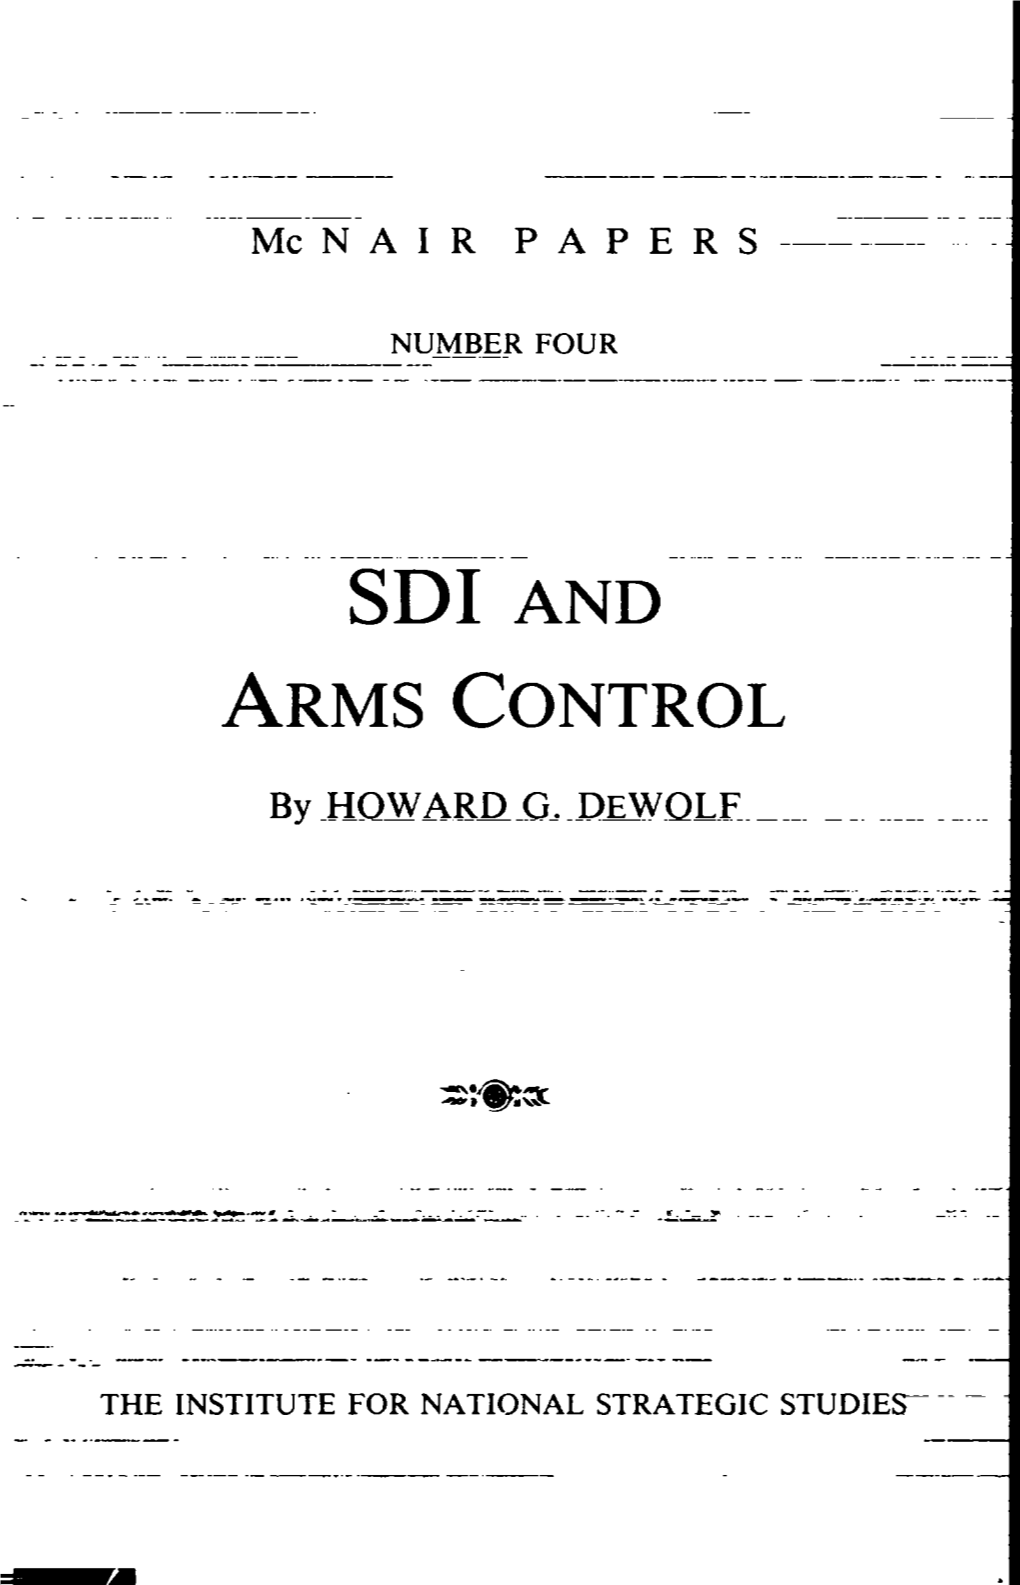 Sdi and Arms Control